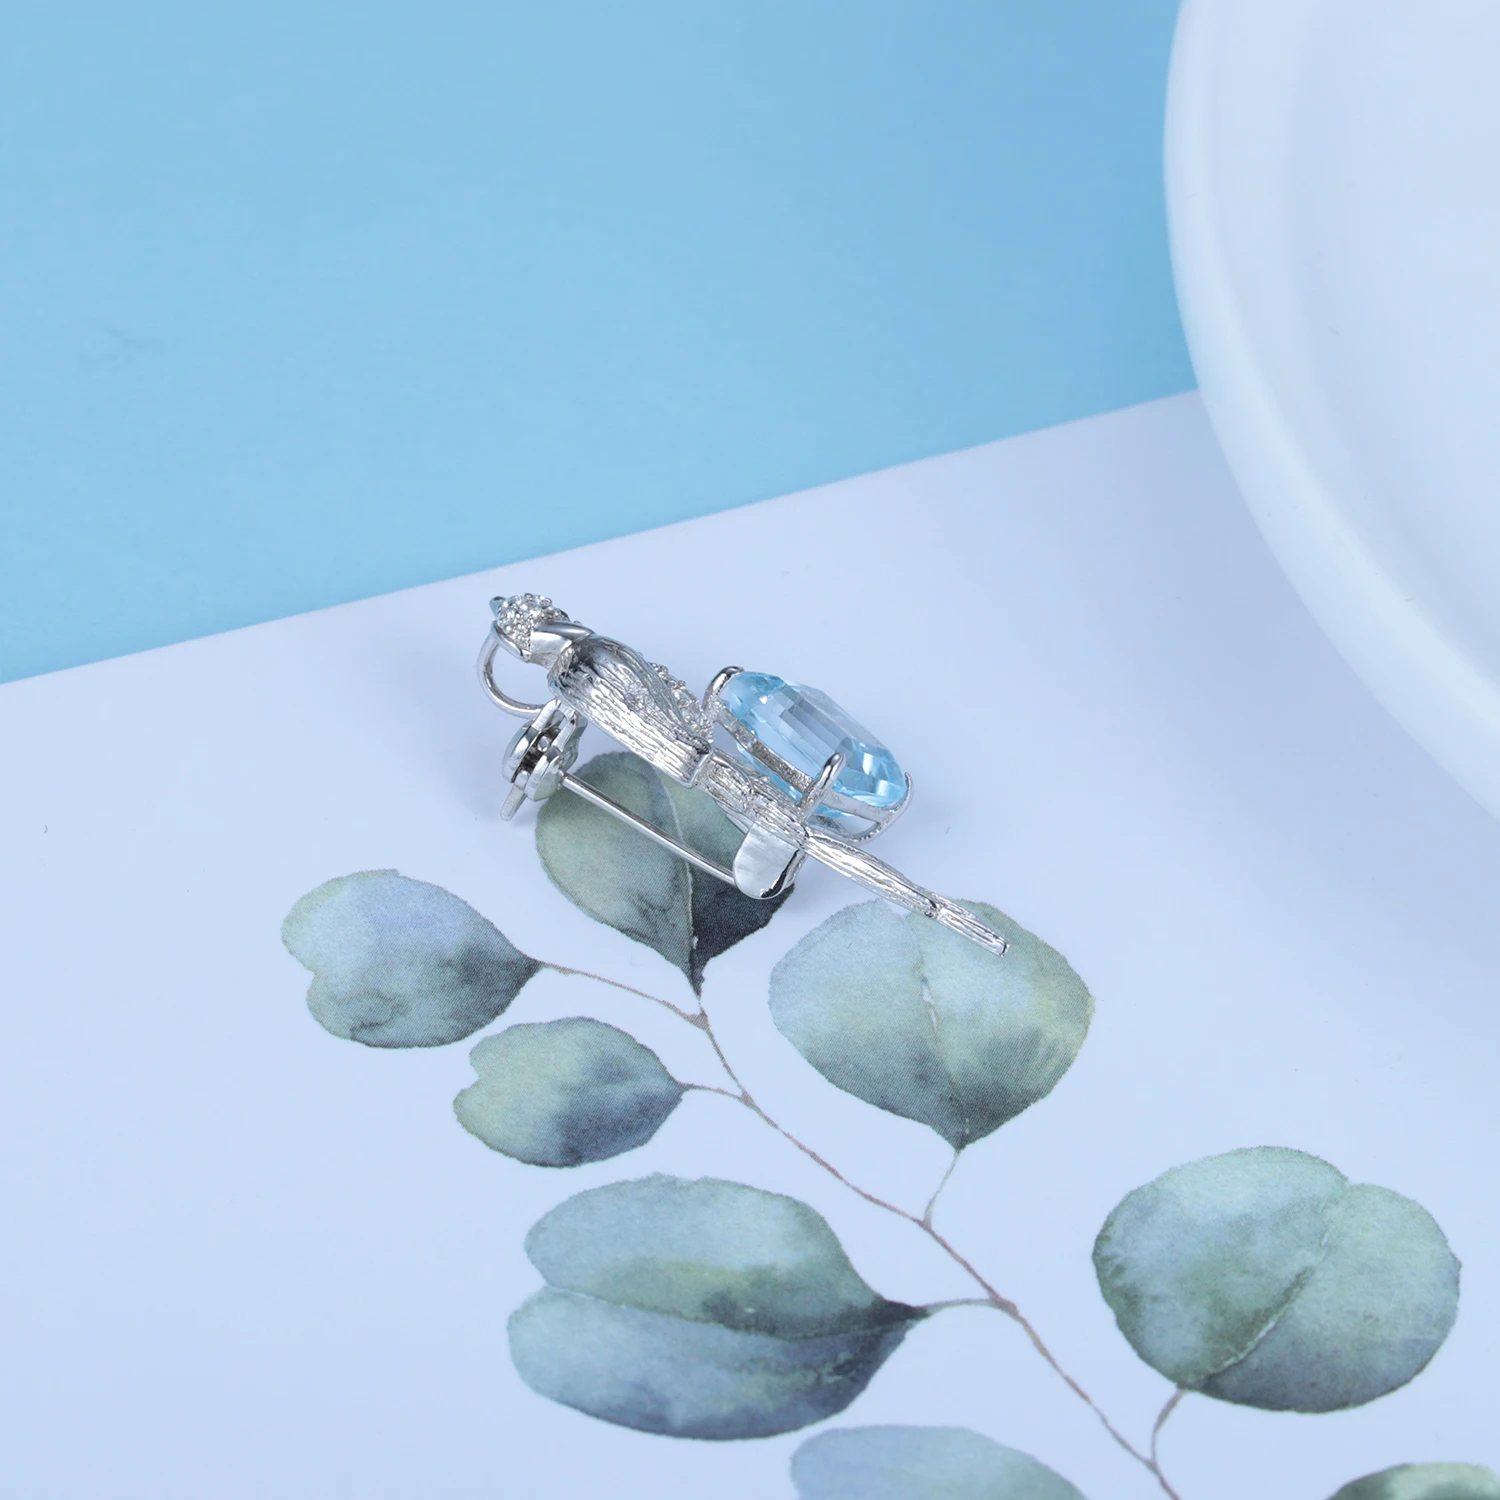 RICA FELIZ 925 Sterling SIlver Statement Brooch Natural Sky Blue Topaz Gemstone Handmade Bird Brooches For Women Fine Jewelry RicaFeliz • 2022